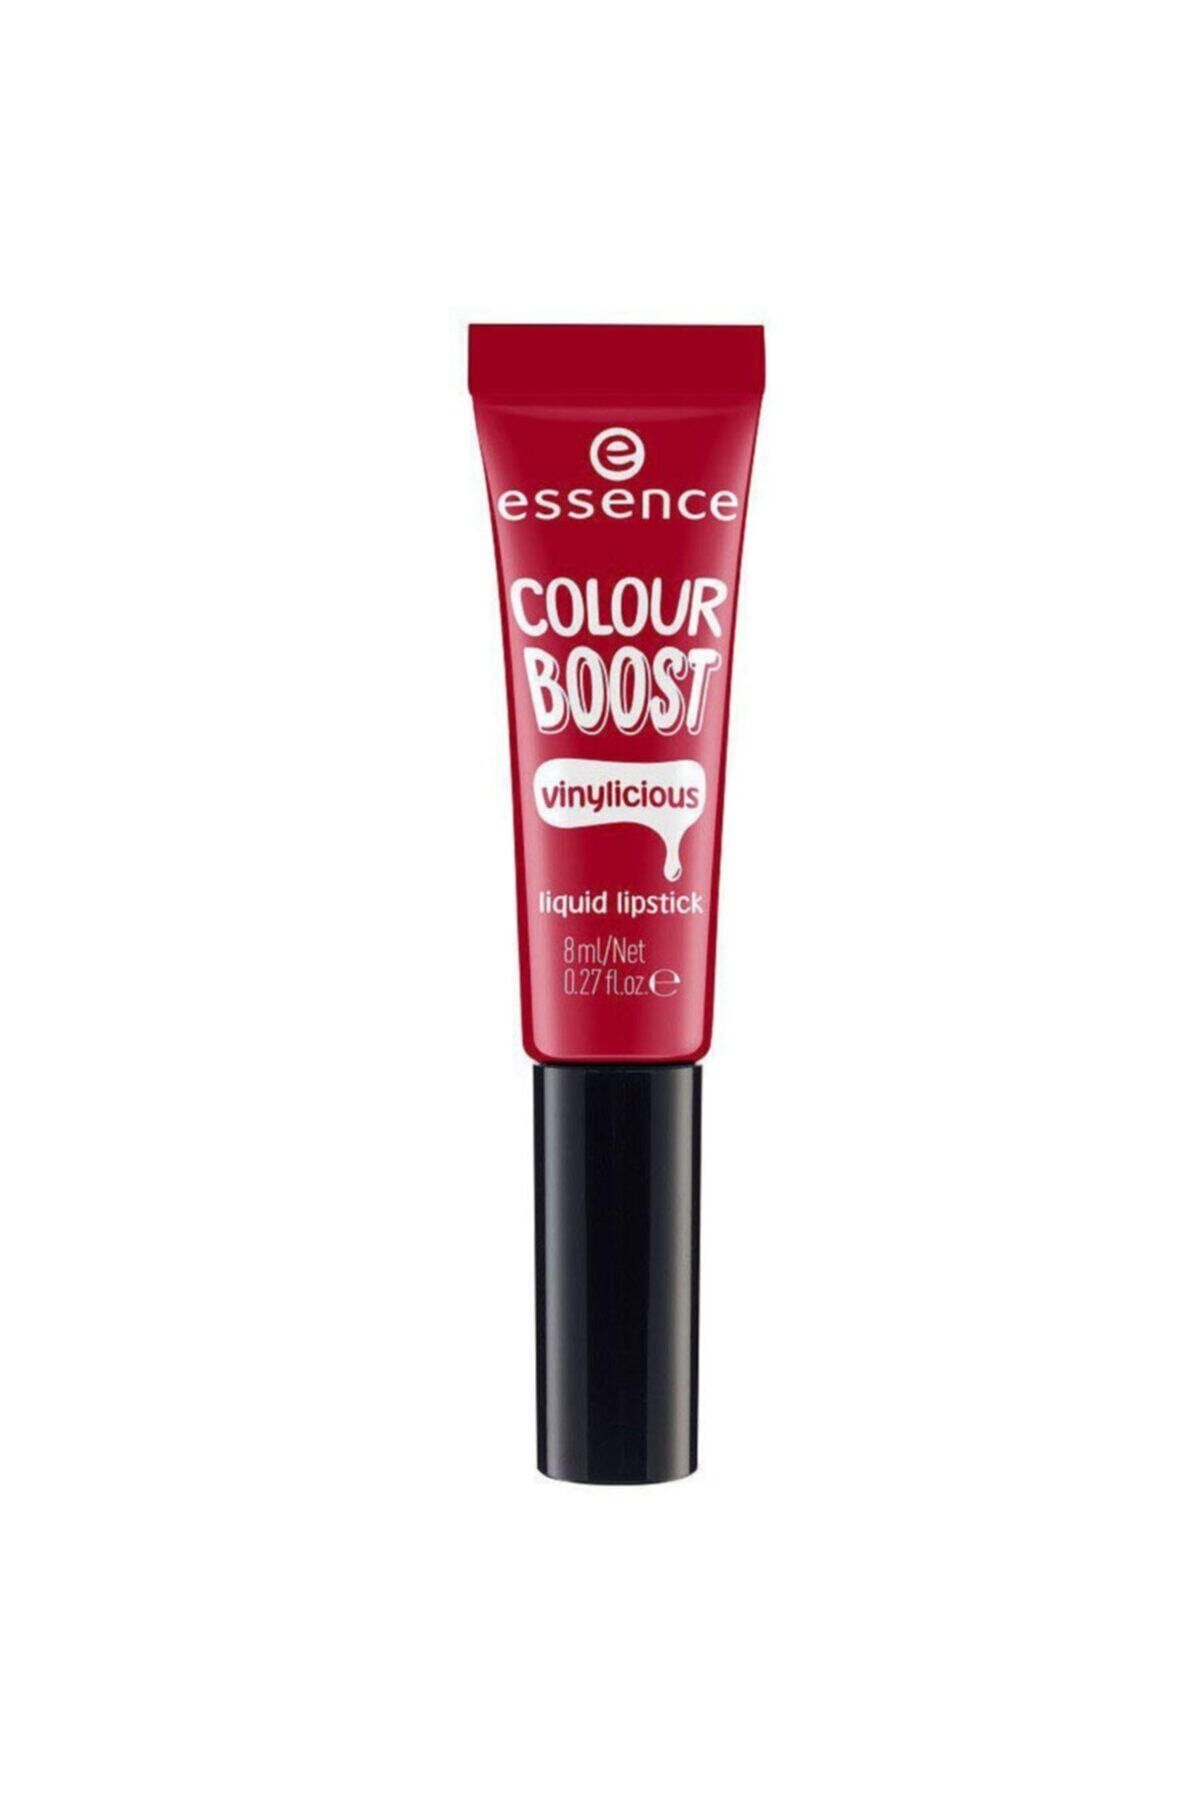 Essence Colour Boost Vinylicious Liquid Lipstick No 07